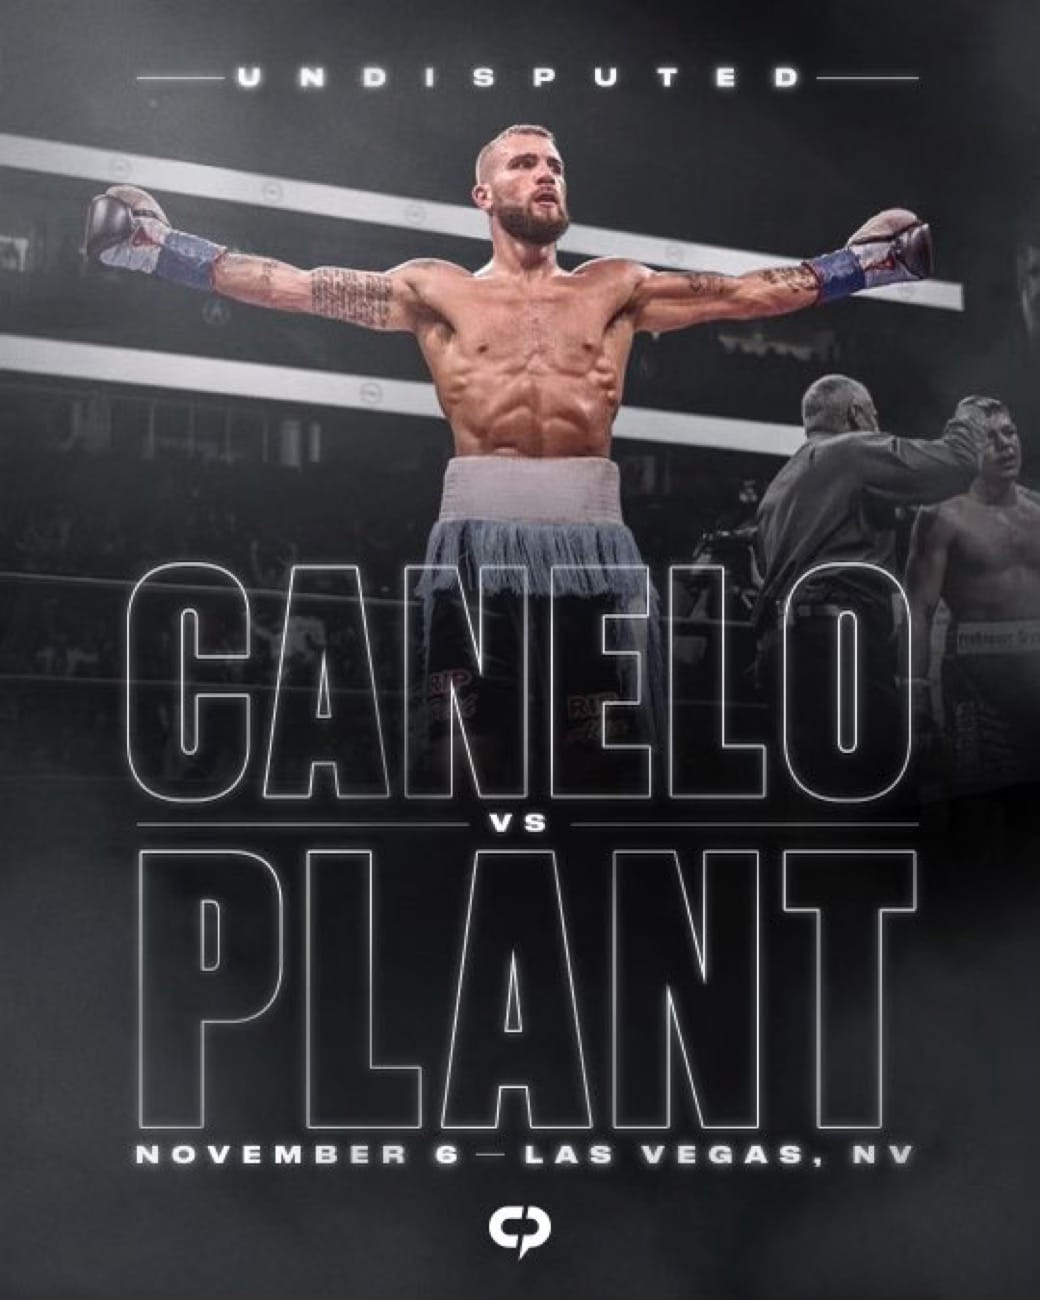 Image: Caleb Plant confident of victory over Canelo Alvarez